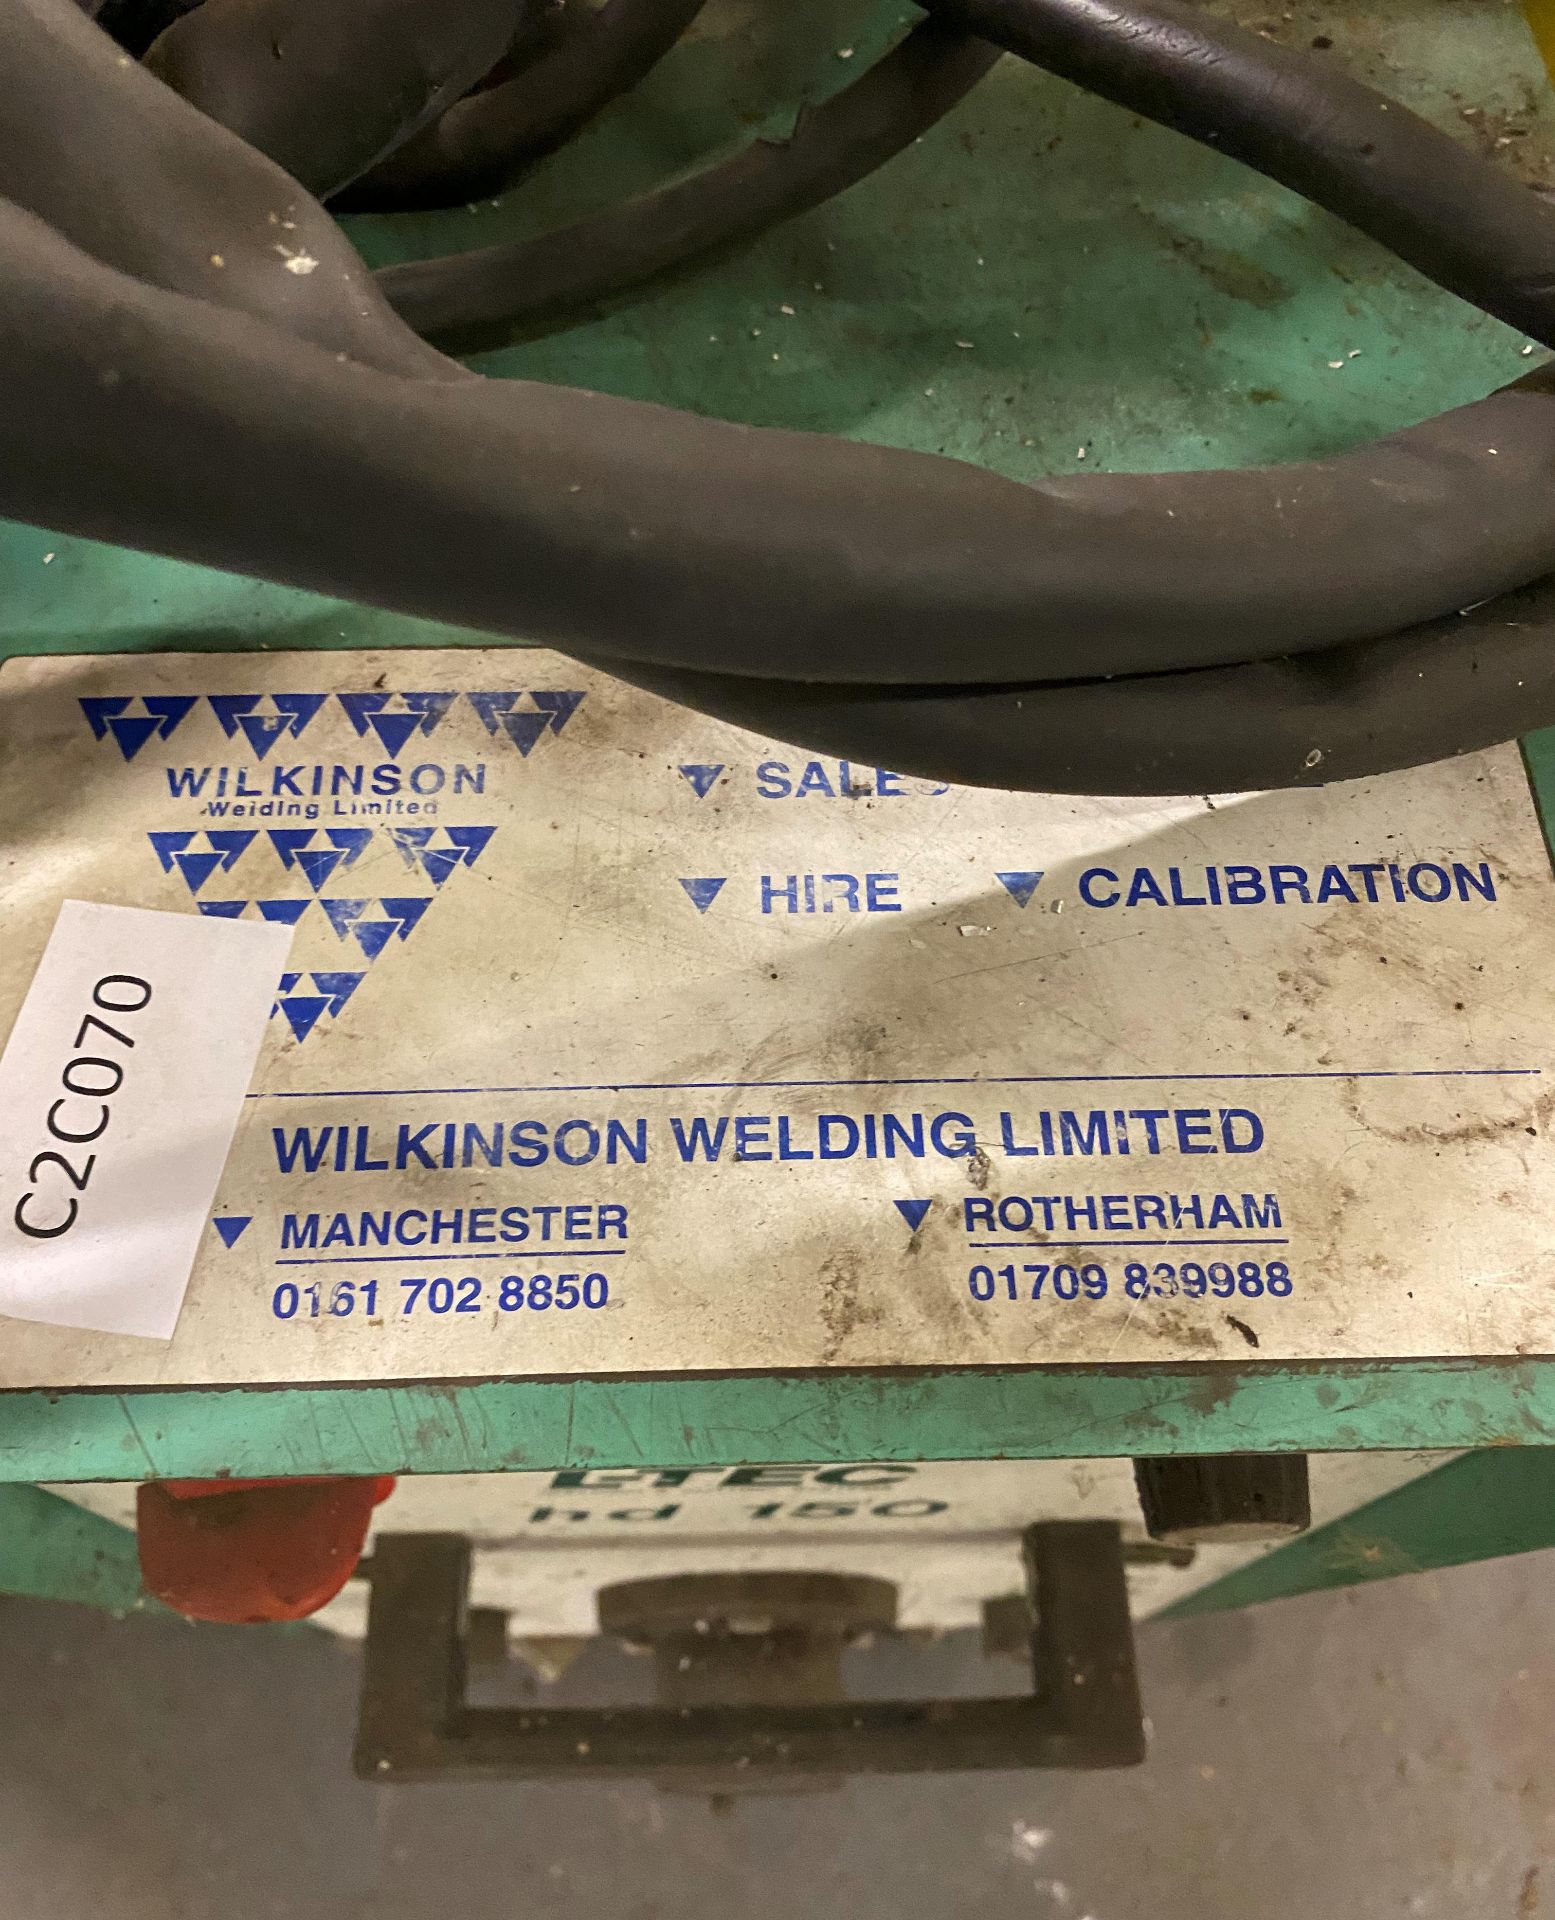 1 x L-Tec Hd150 Tig Welding Unit - Ref: C2C070 - CL789 - Location: Altrincham WA14Collection Details - Image 3 of 3